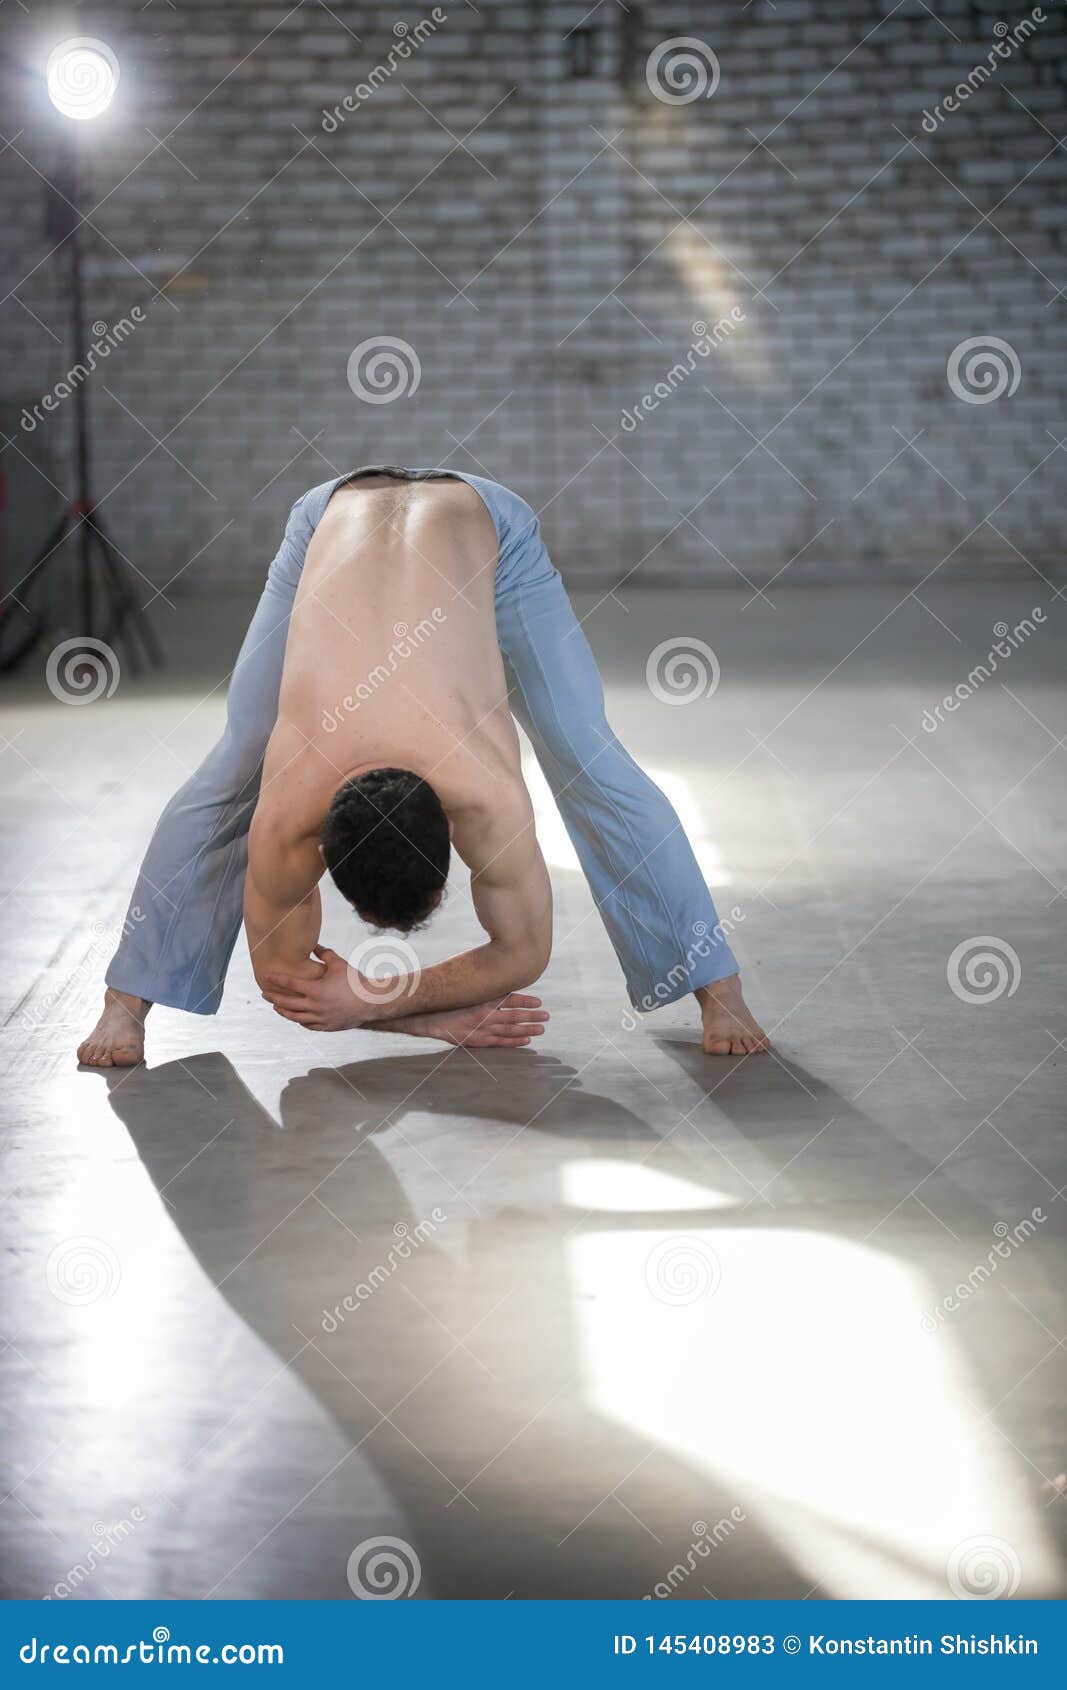 athletic-man-capoeira-training-bending-down-spine-stretching-athletic-man-capoeira-training-bending-down-spine-145408983.jpg